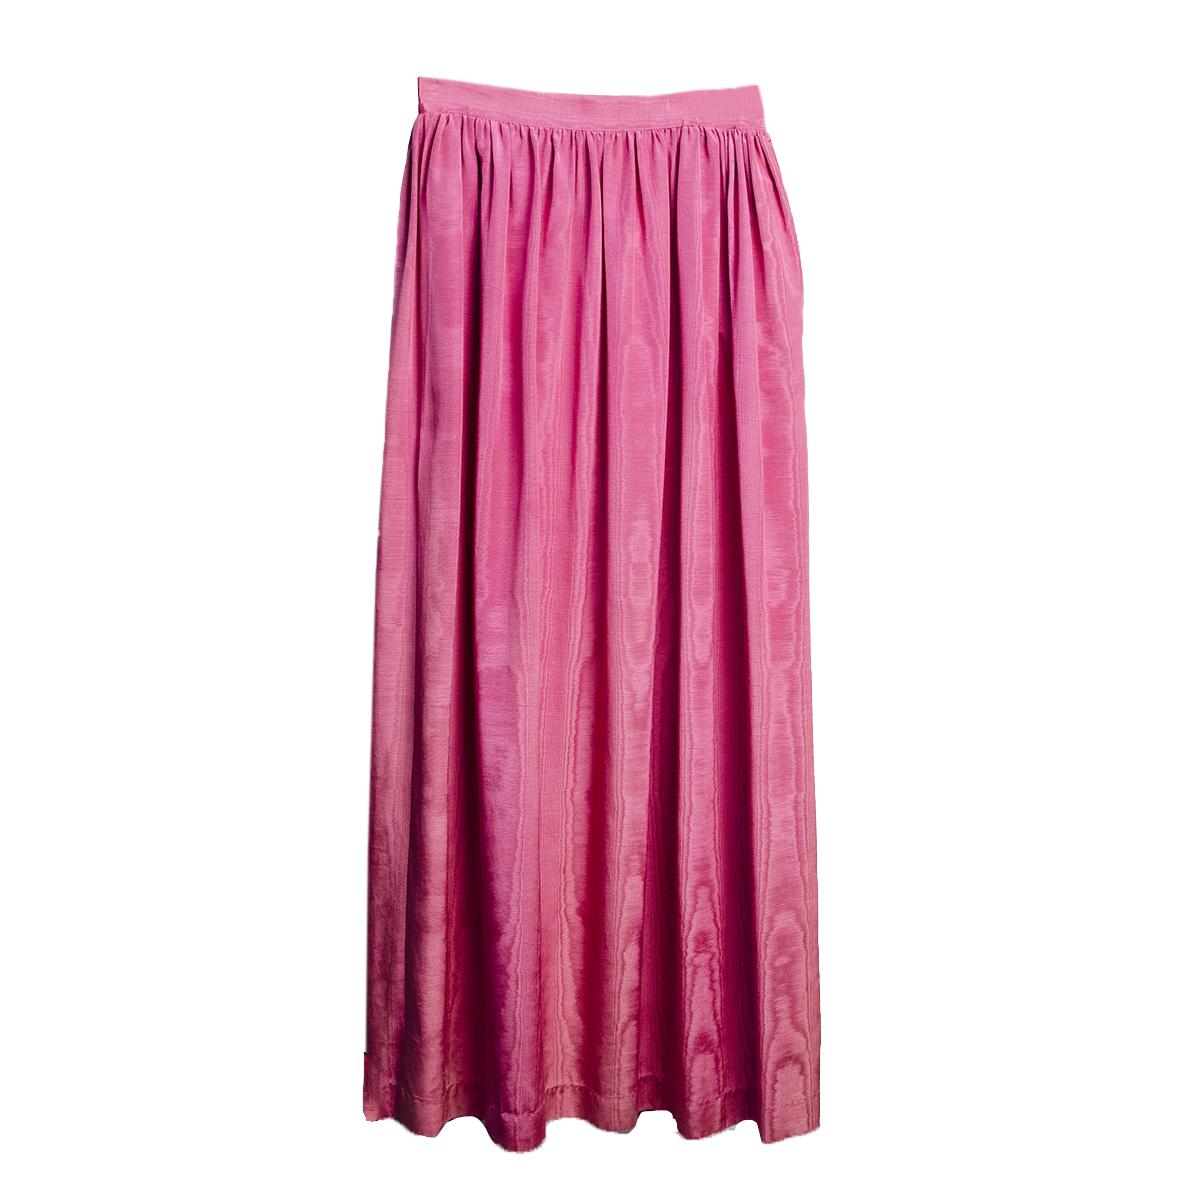 Salmon pink silk moire skirt